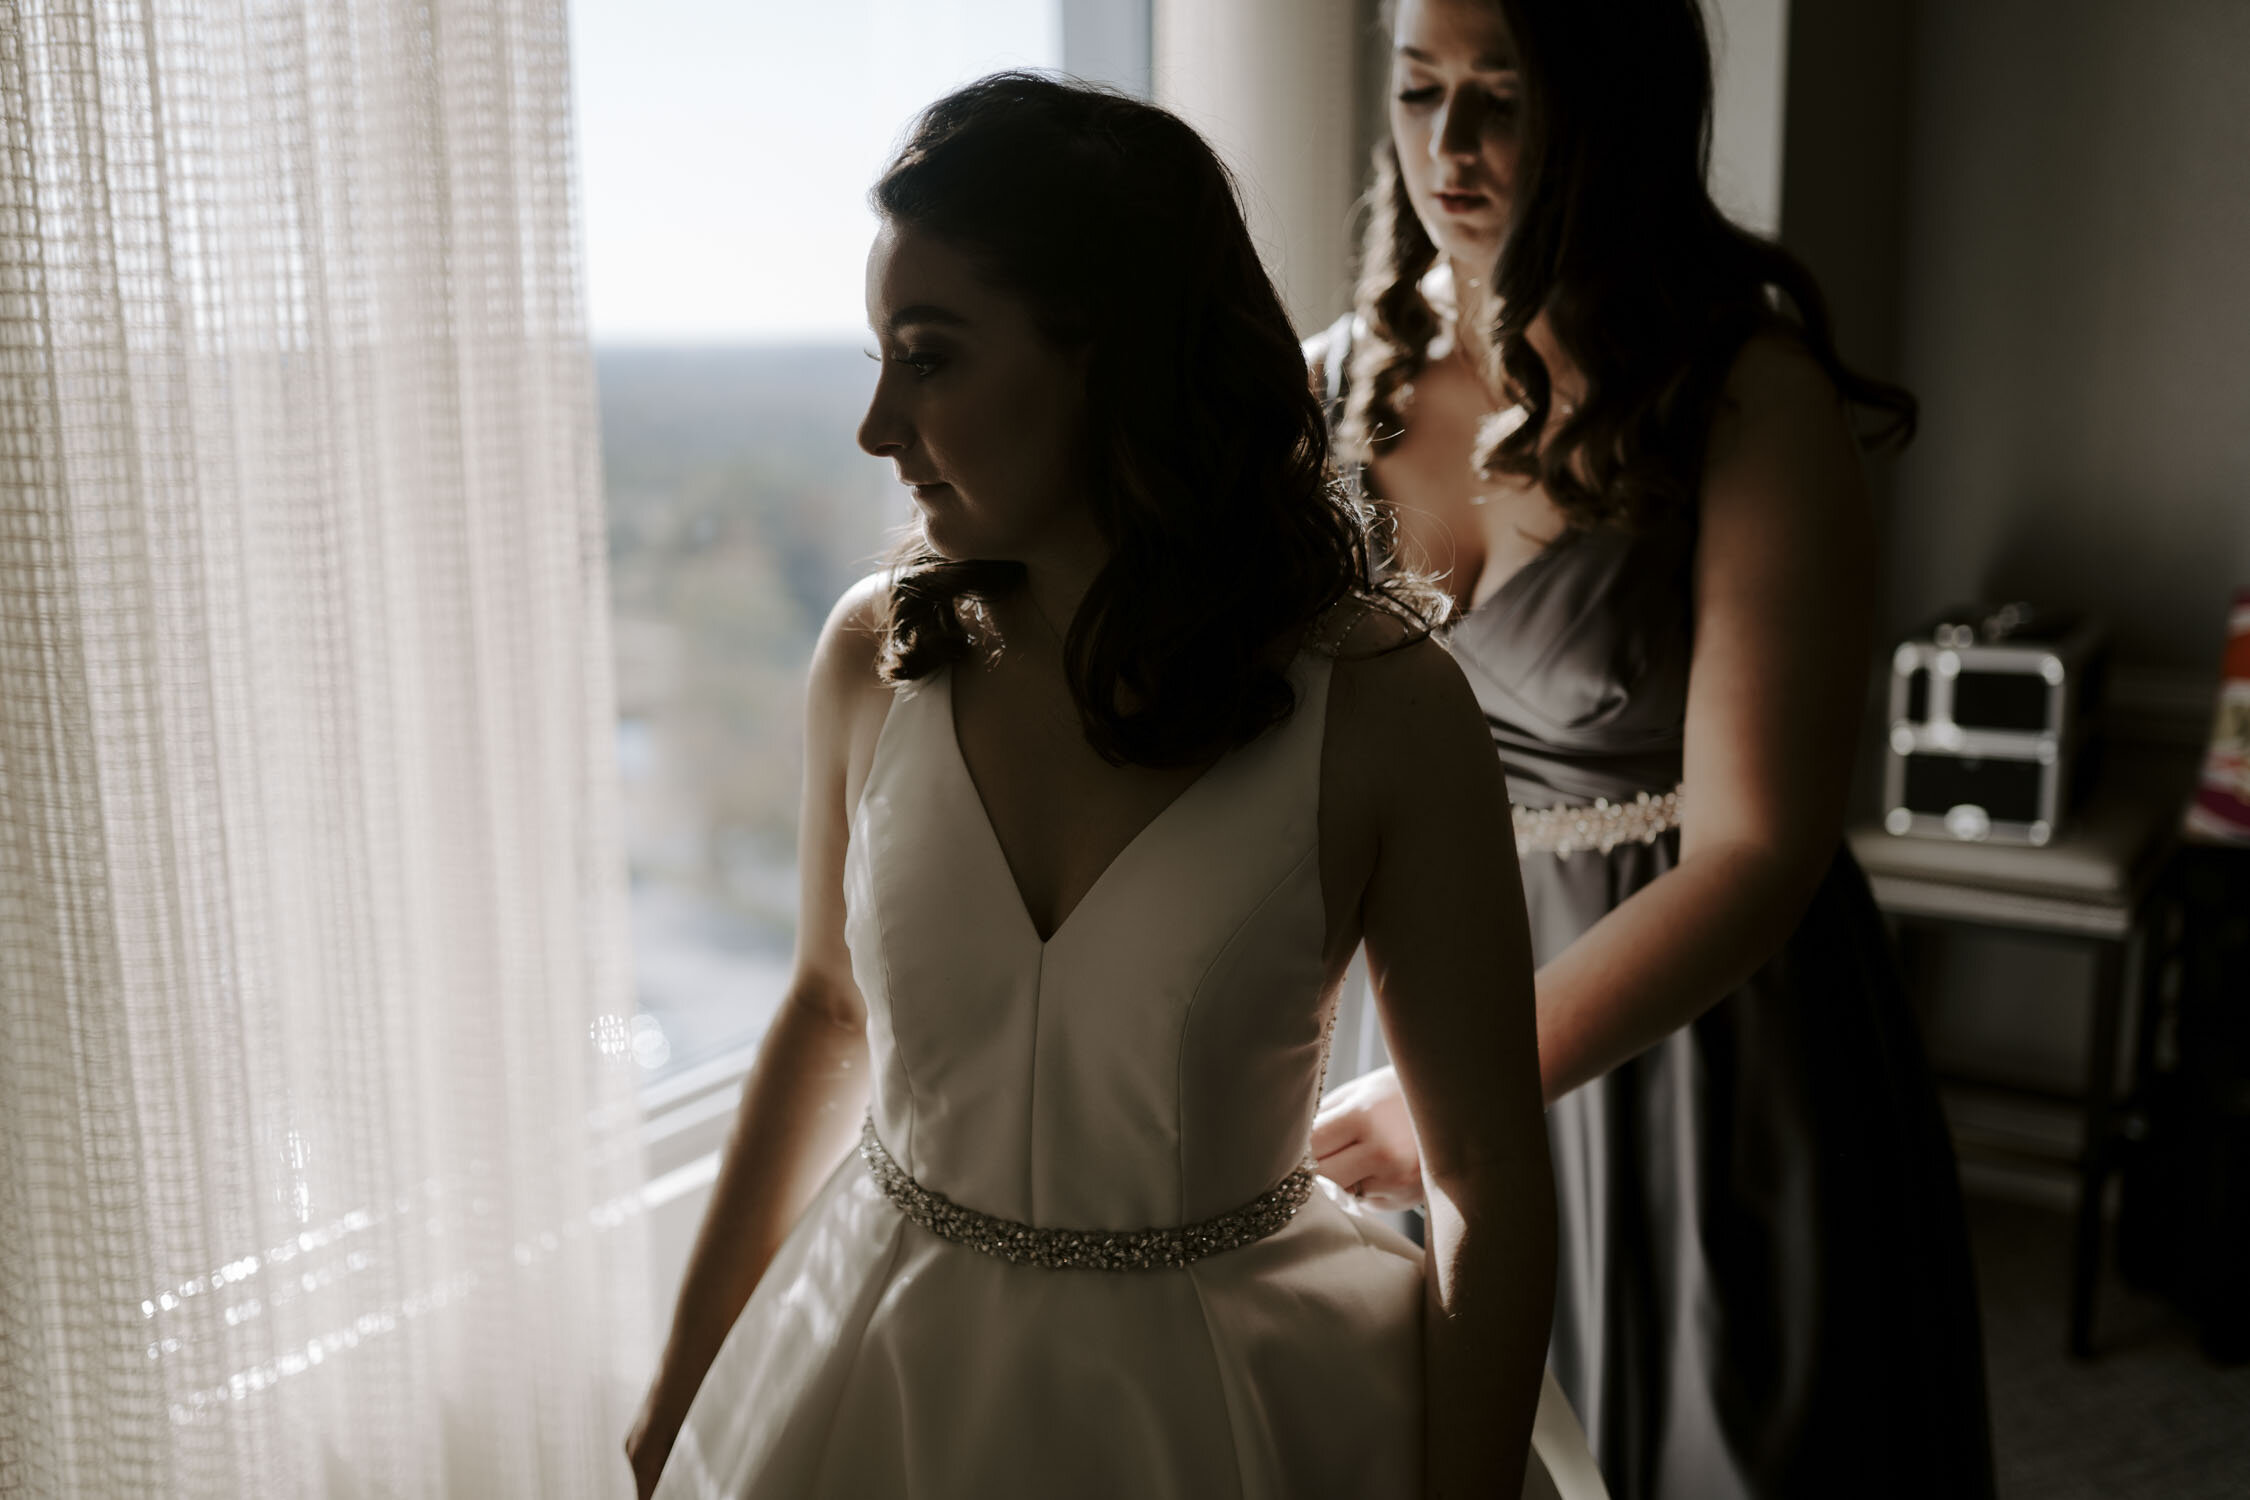 Classy and Elegant Grandover Resort Wedding by Kayli LaFon Photography | Greensboro Winston-Salem, NC Wedding Photographer